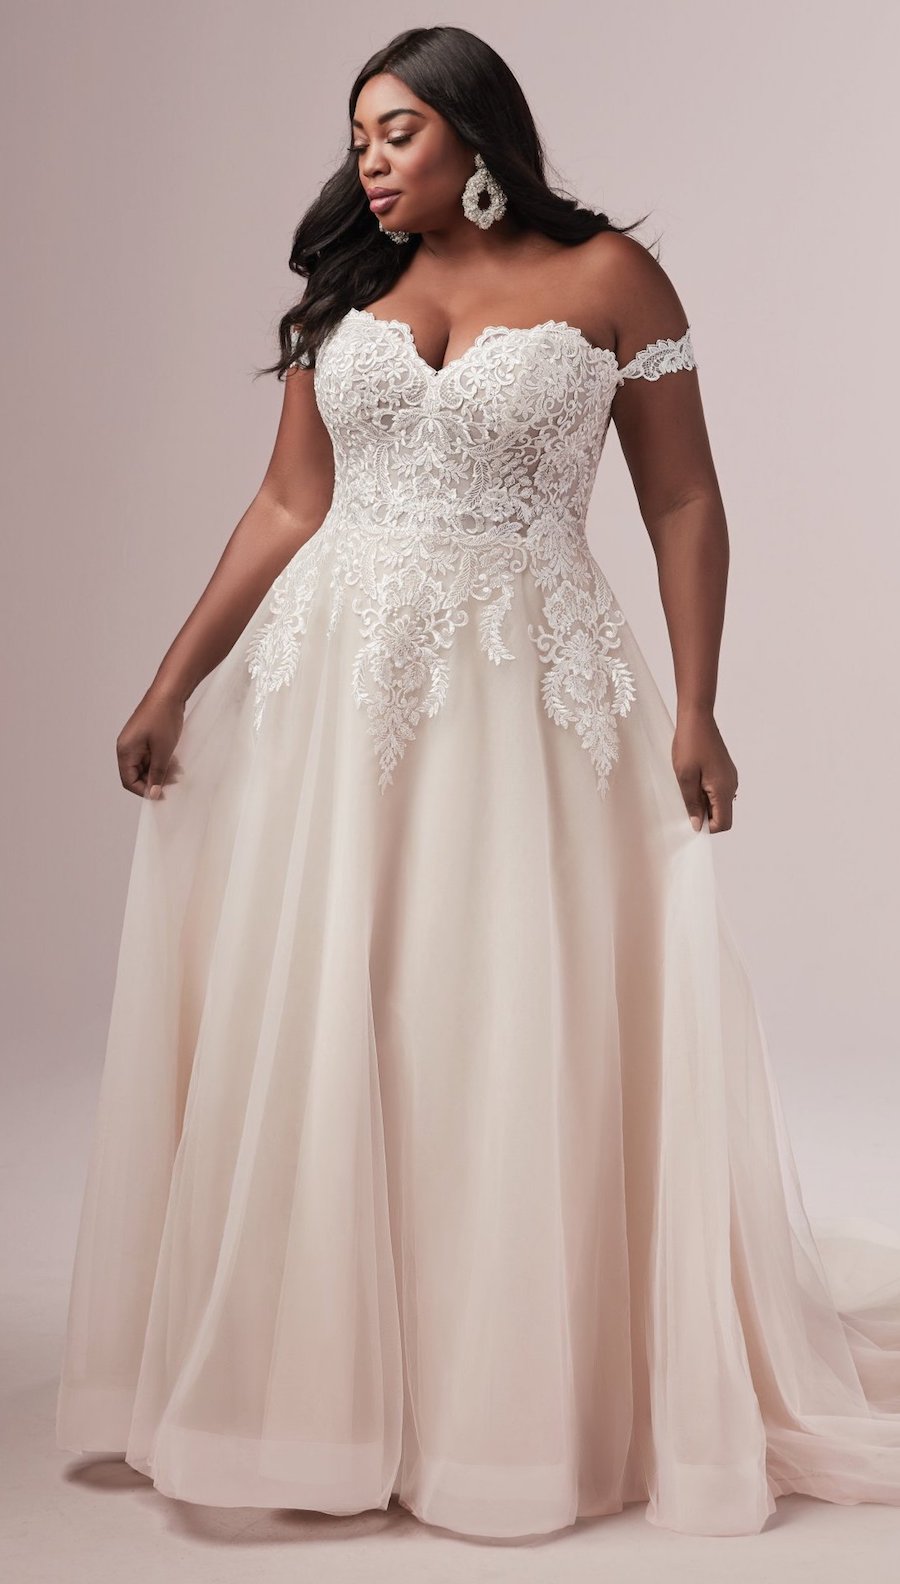 12 Gorgeous Plus Size Wedding Dresses For The Curvy Bride 5837